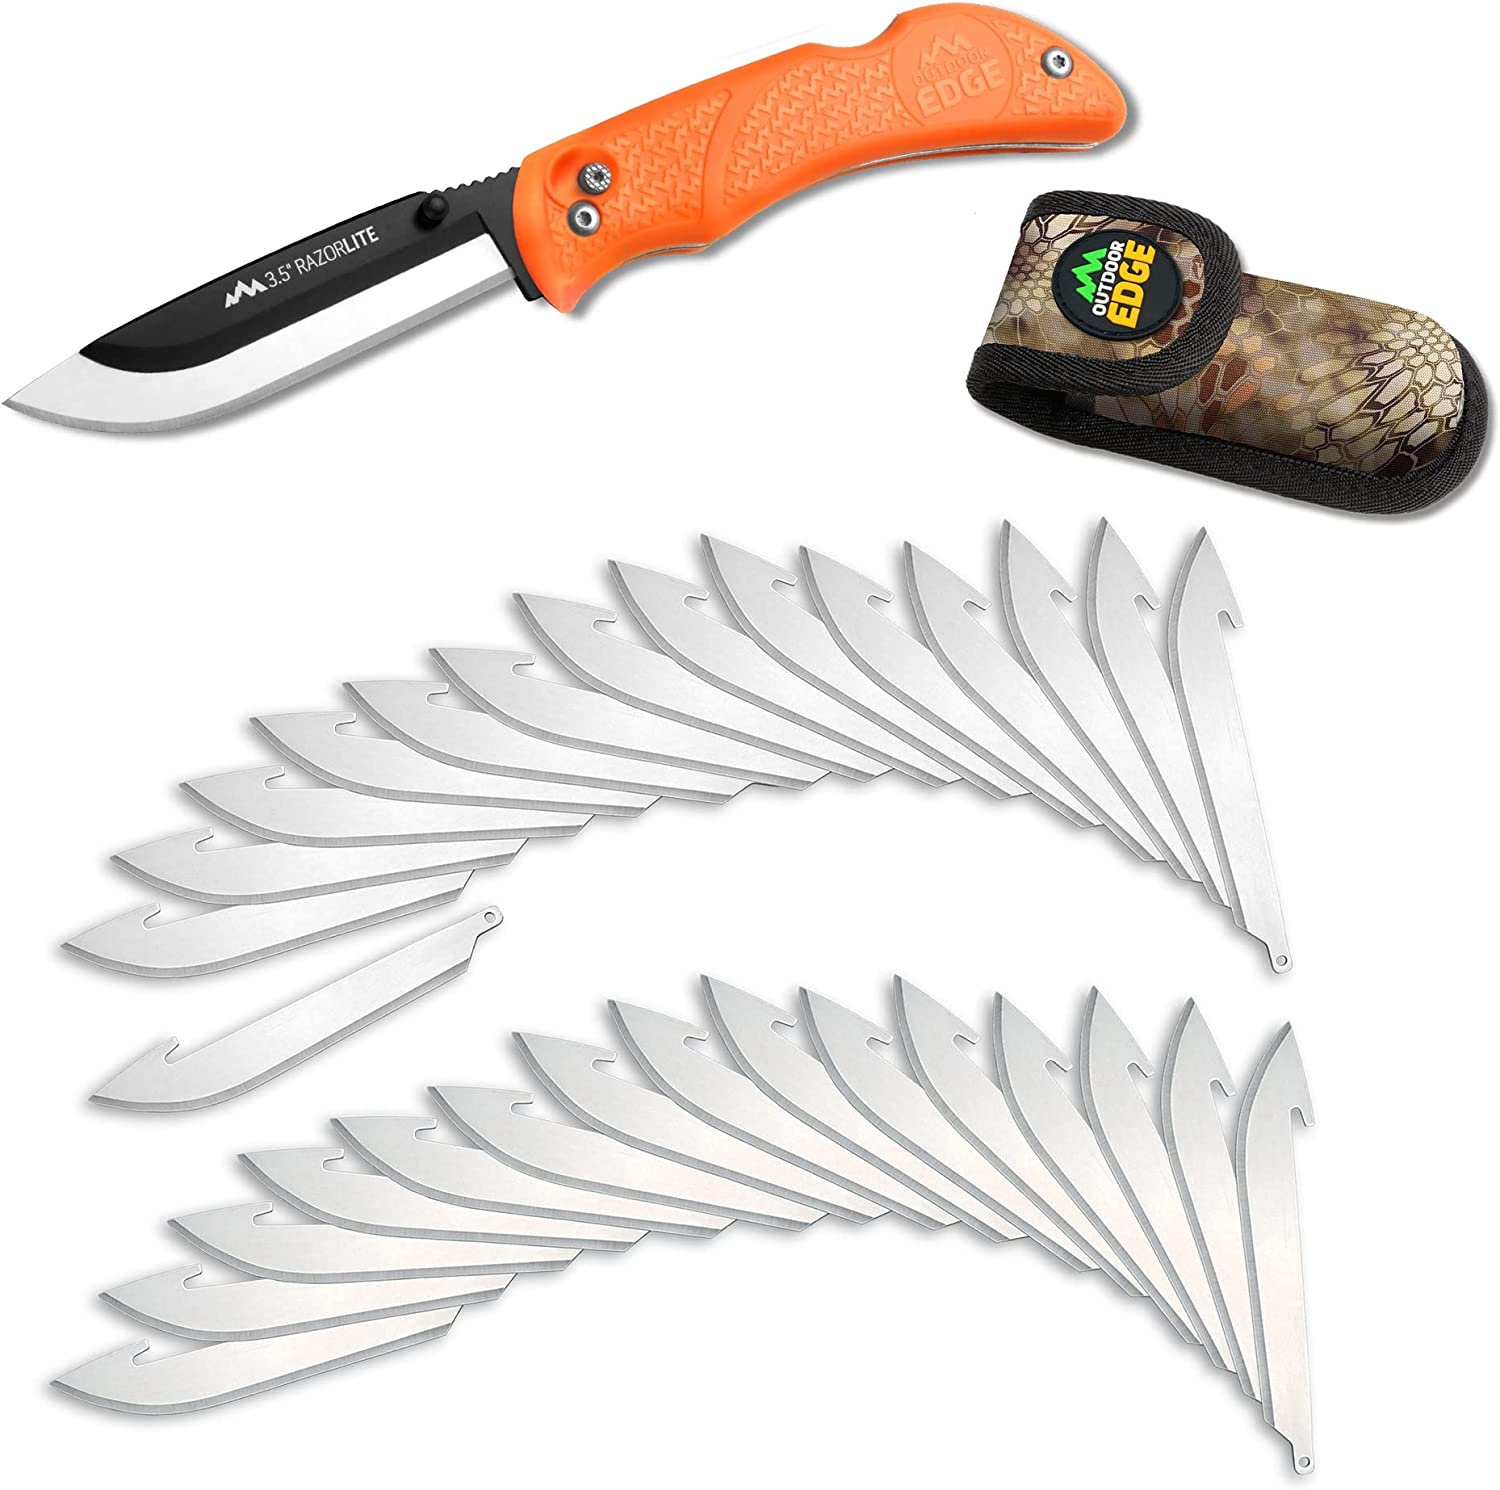 OUTDOOR EDGE RazorLite – Replaceable Blade Folding Hunting Knife with Rubberized Nonslip TPR Handle, Camo Nylon Belt Sheath, (Orange, 30 Blades)